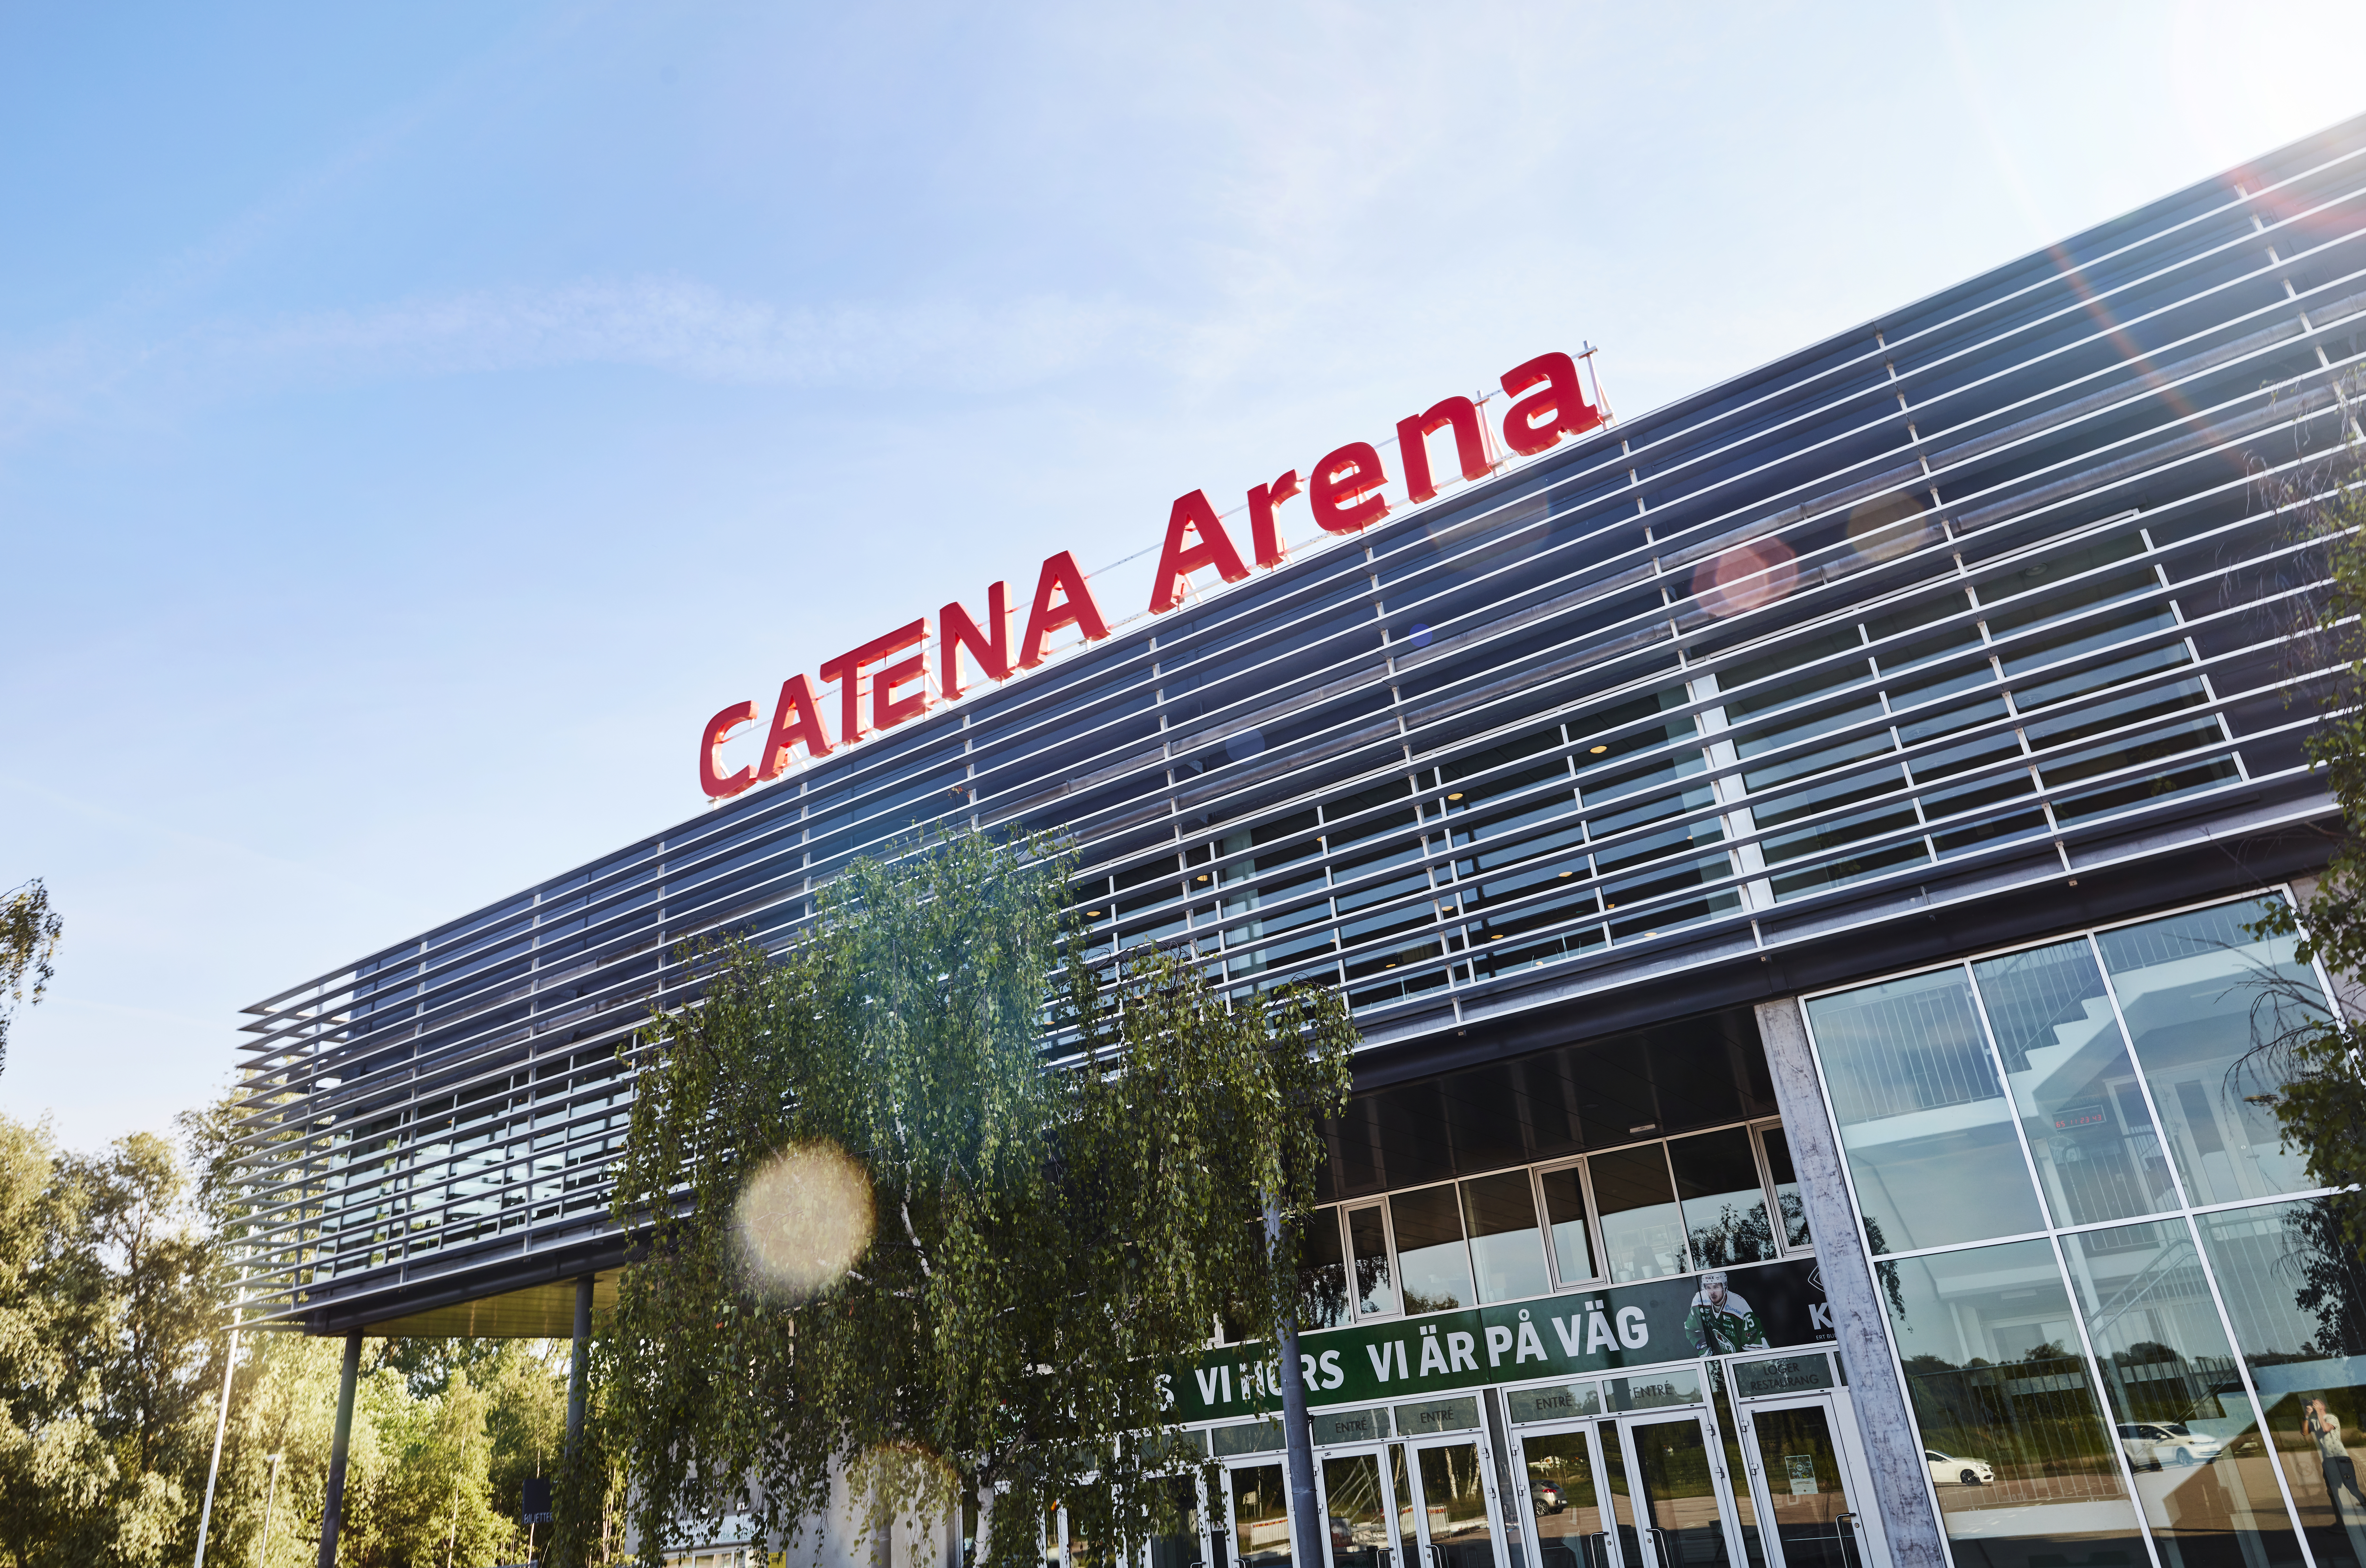 Catena Arena in Ängelholm.